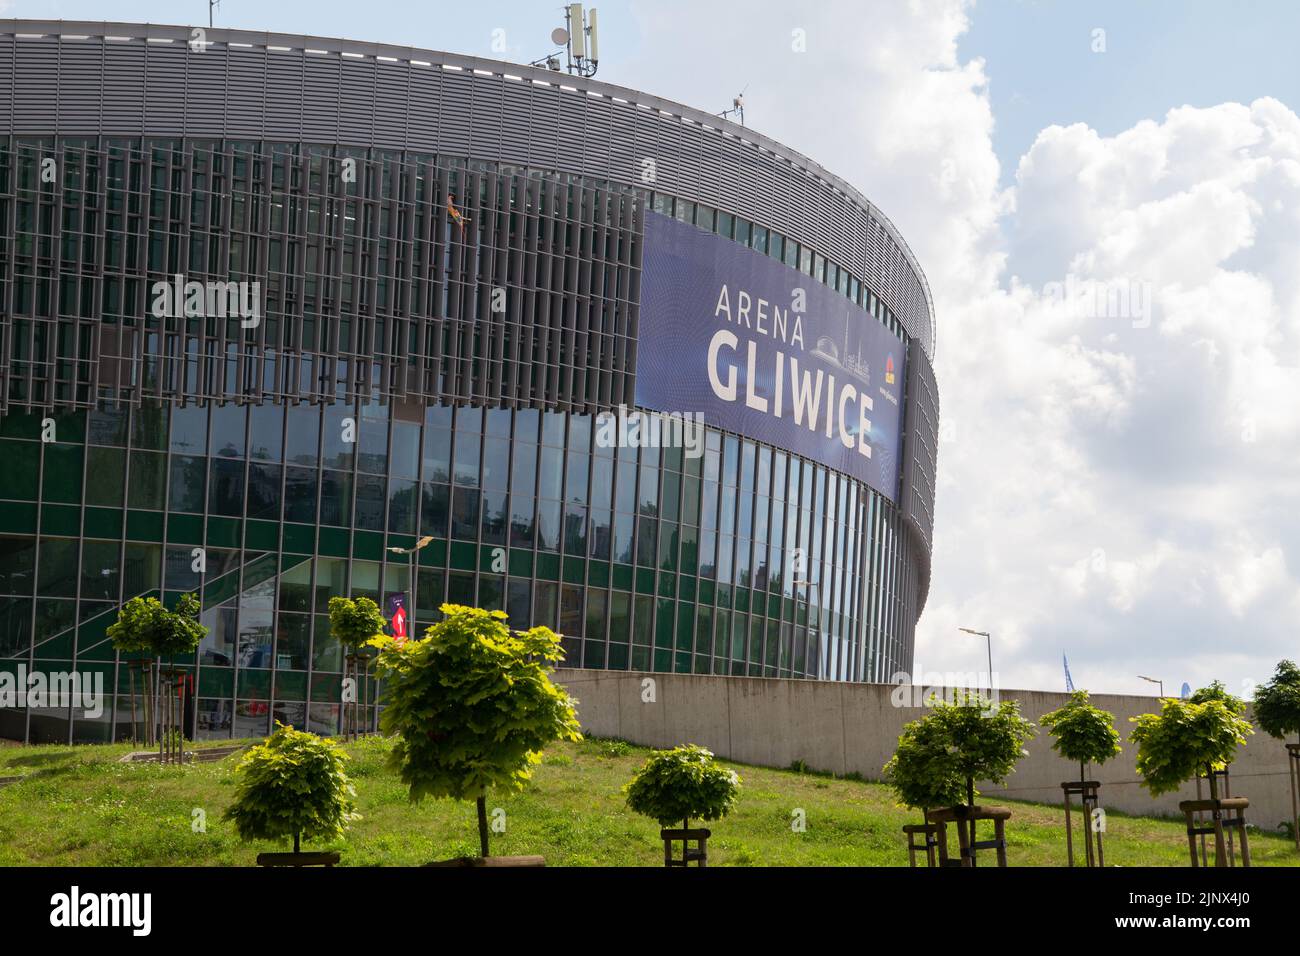 Arena Gliwice, modern indoor multi-purpose hall, sports and entertainment venue in Gliwice, Poland. Stock Photo